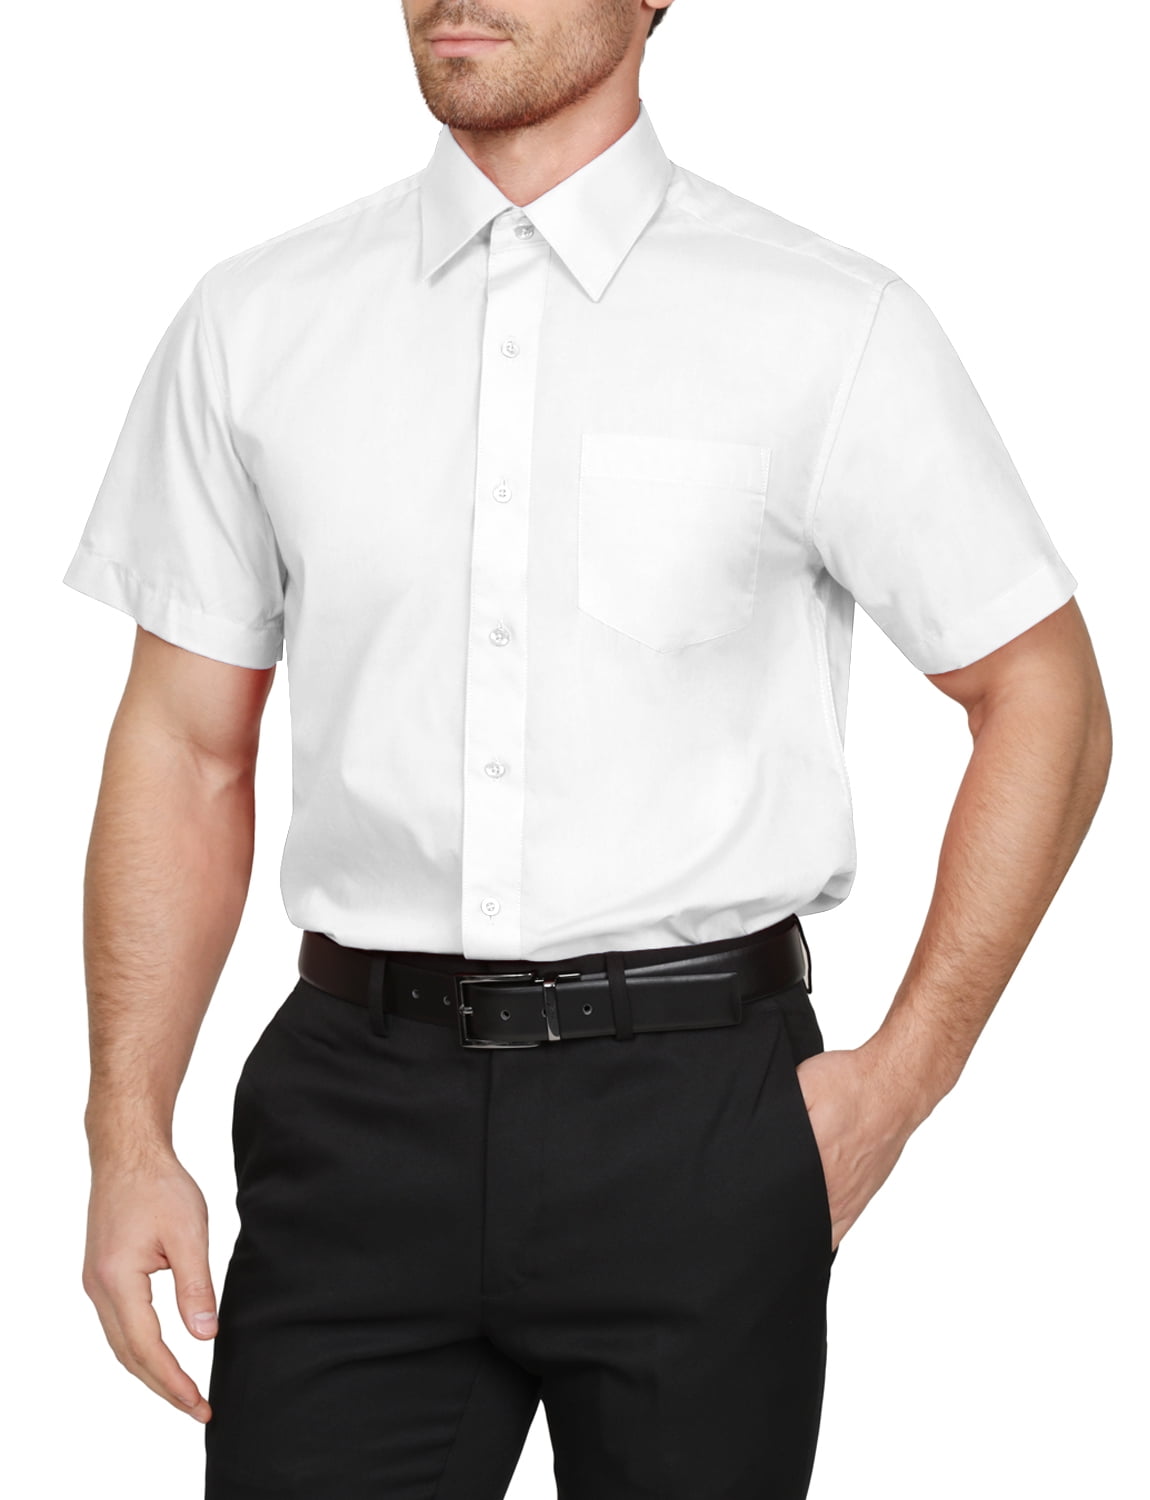 J. METHOD Short Sleeve Button Down Spread Collar Dress Shirt (Men's), 1 ...